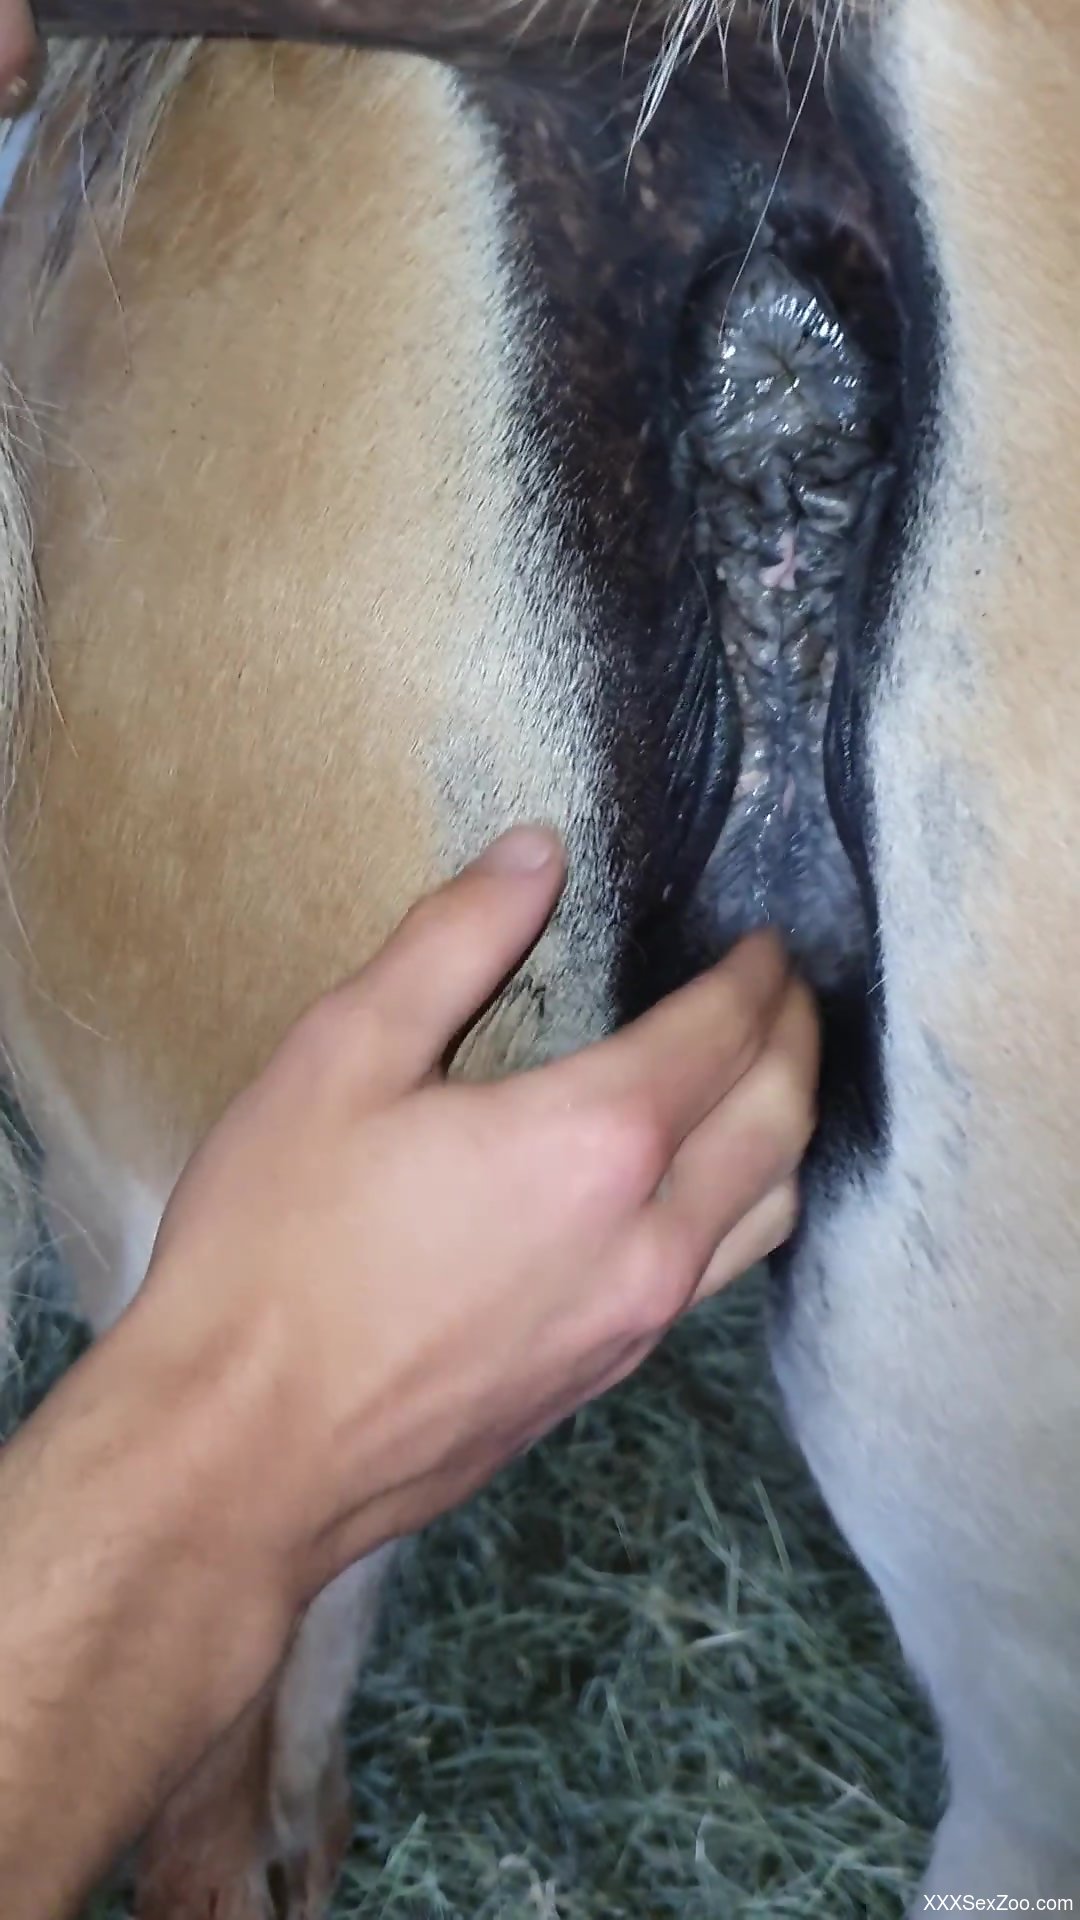 Horse To Man Fucking Sex Hd - Horny guy finger fucks his female horse in harsh modes - XXXSexZoo.com